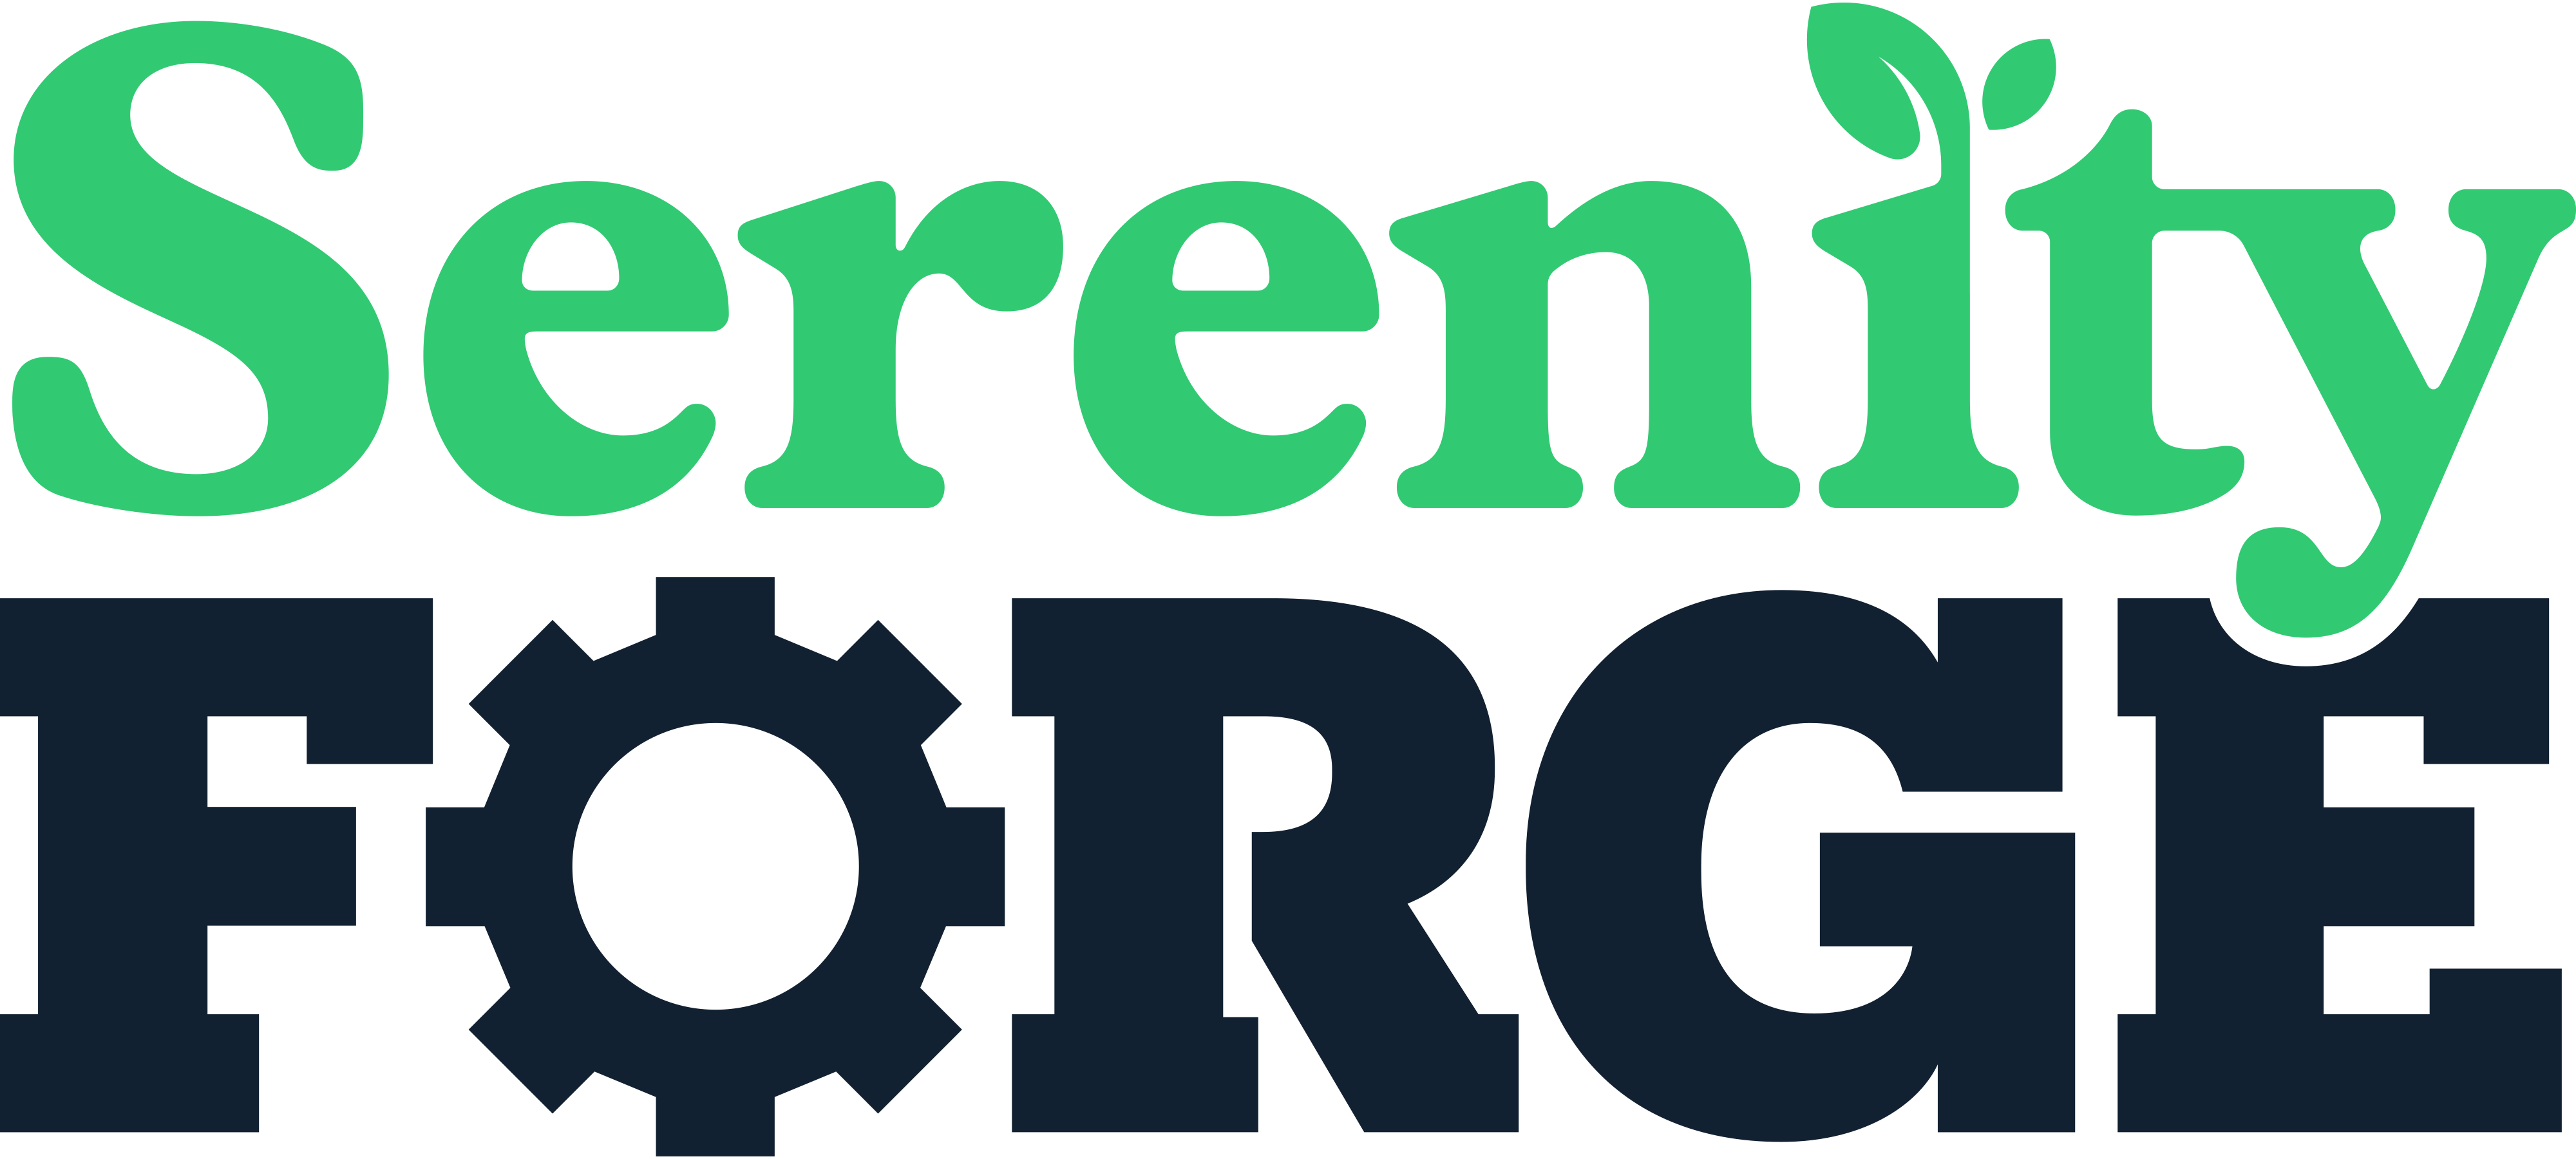 Serenity Forge logo